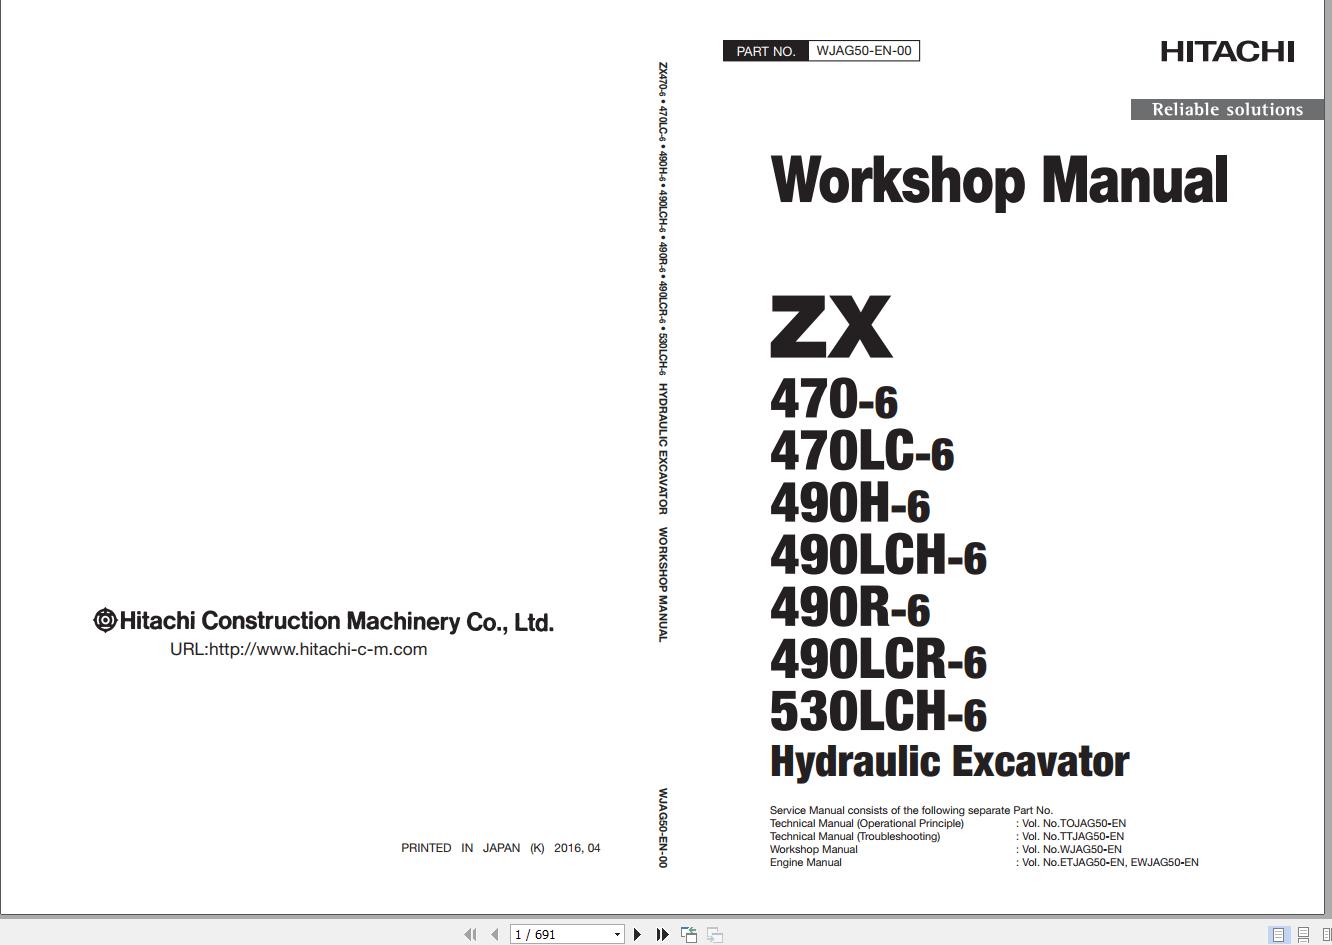 Hitachi Hydraulic Excavator ZX470-6 to 530LCH-6 Shop Manuals 